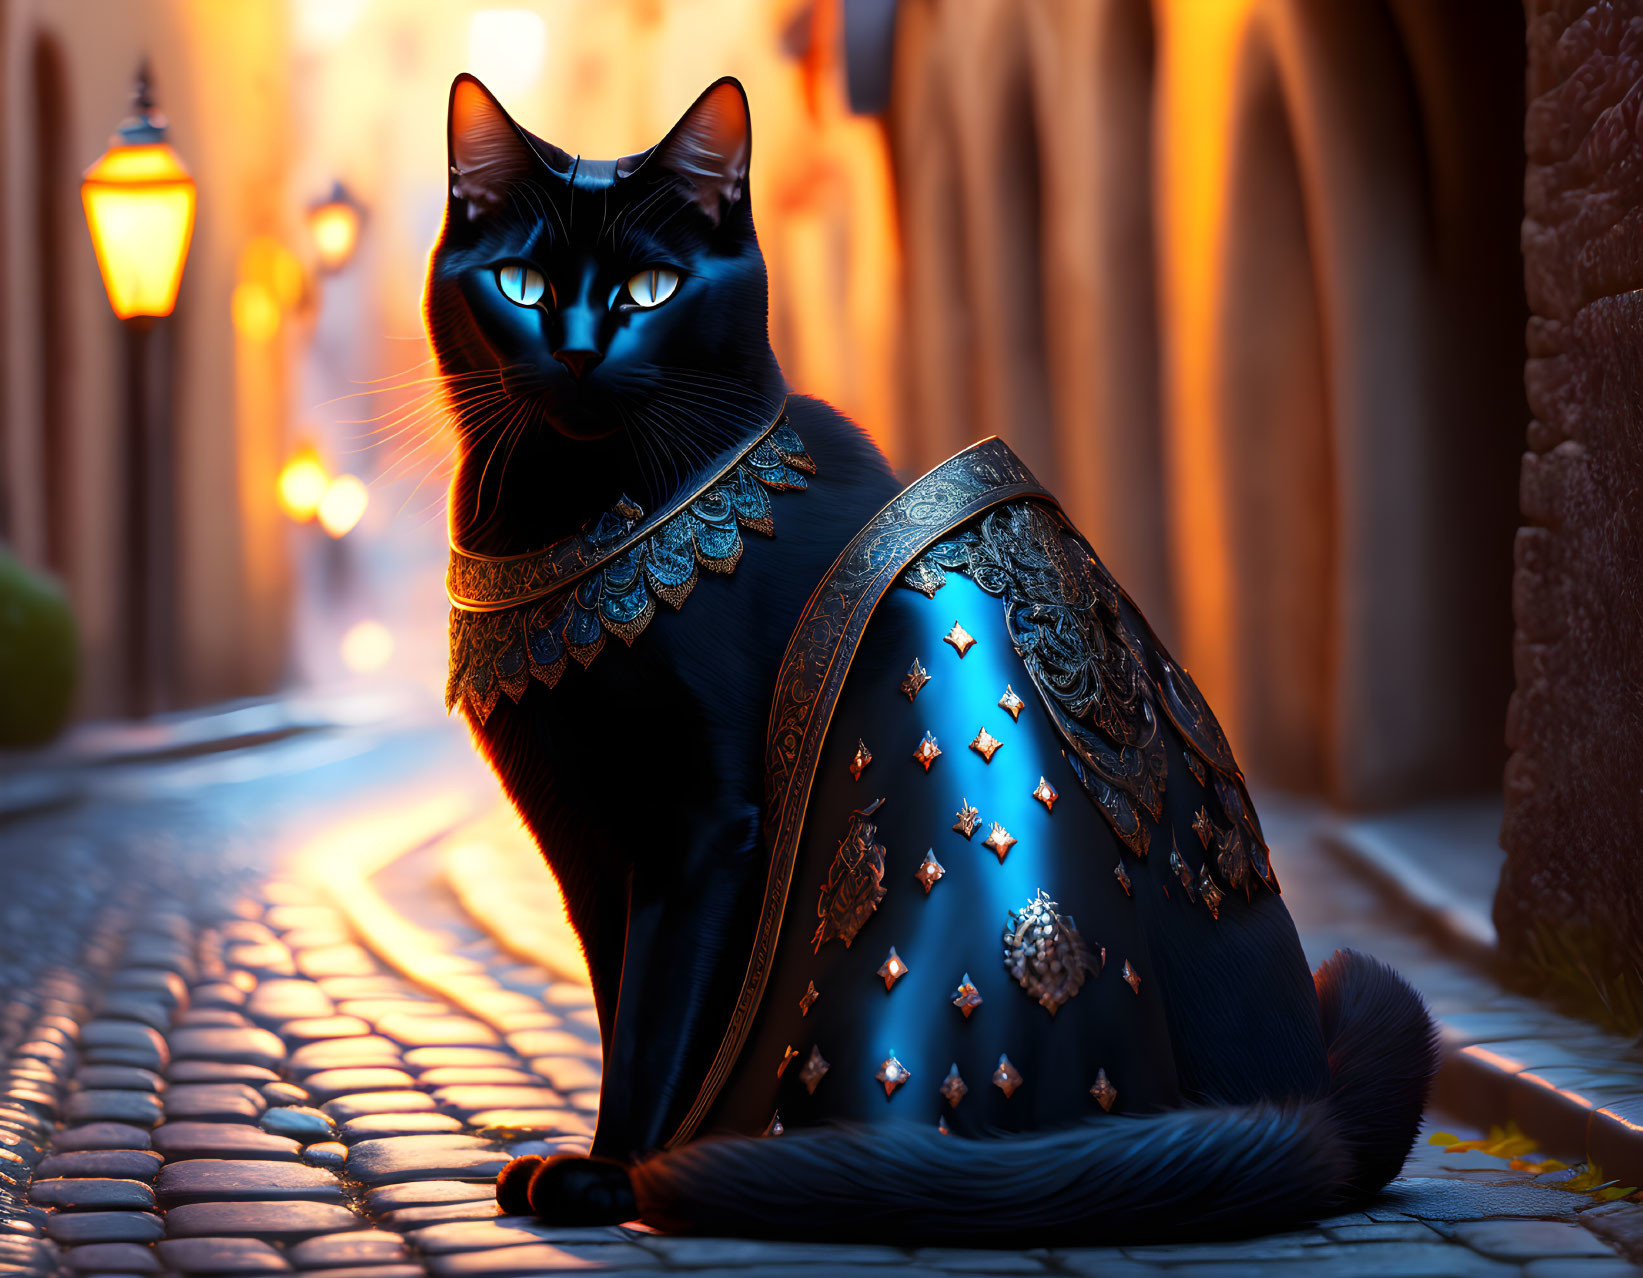 Black Cat in Royal Blue Cloak on Cobblestone Street with Lanterns